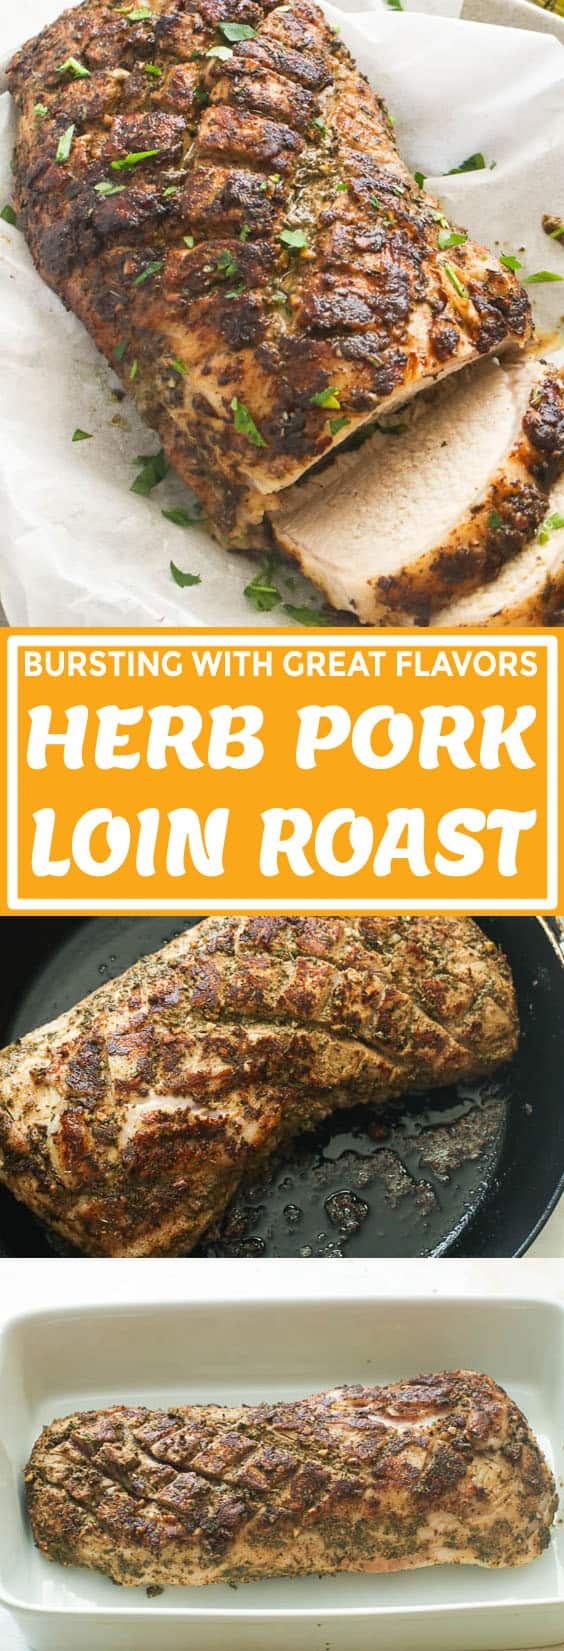 Herb Pork Loin Roast